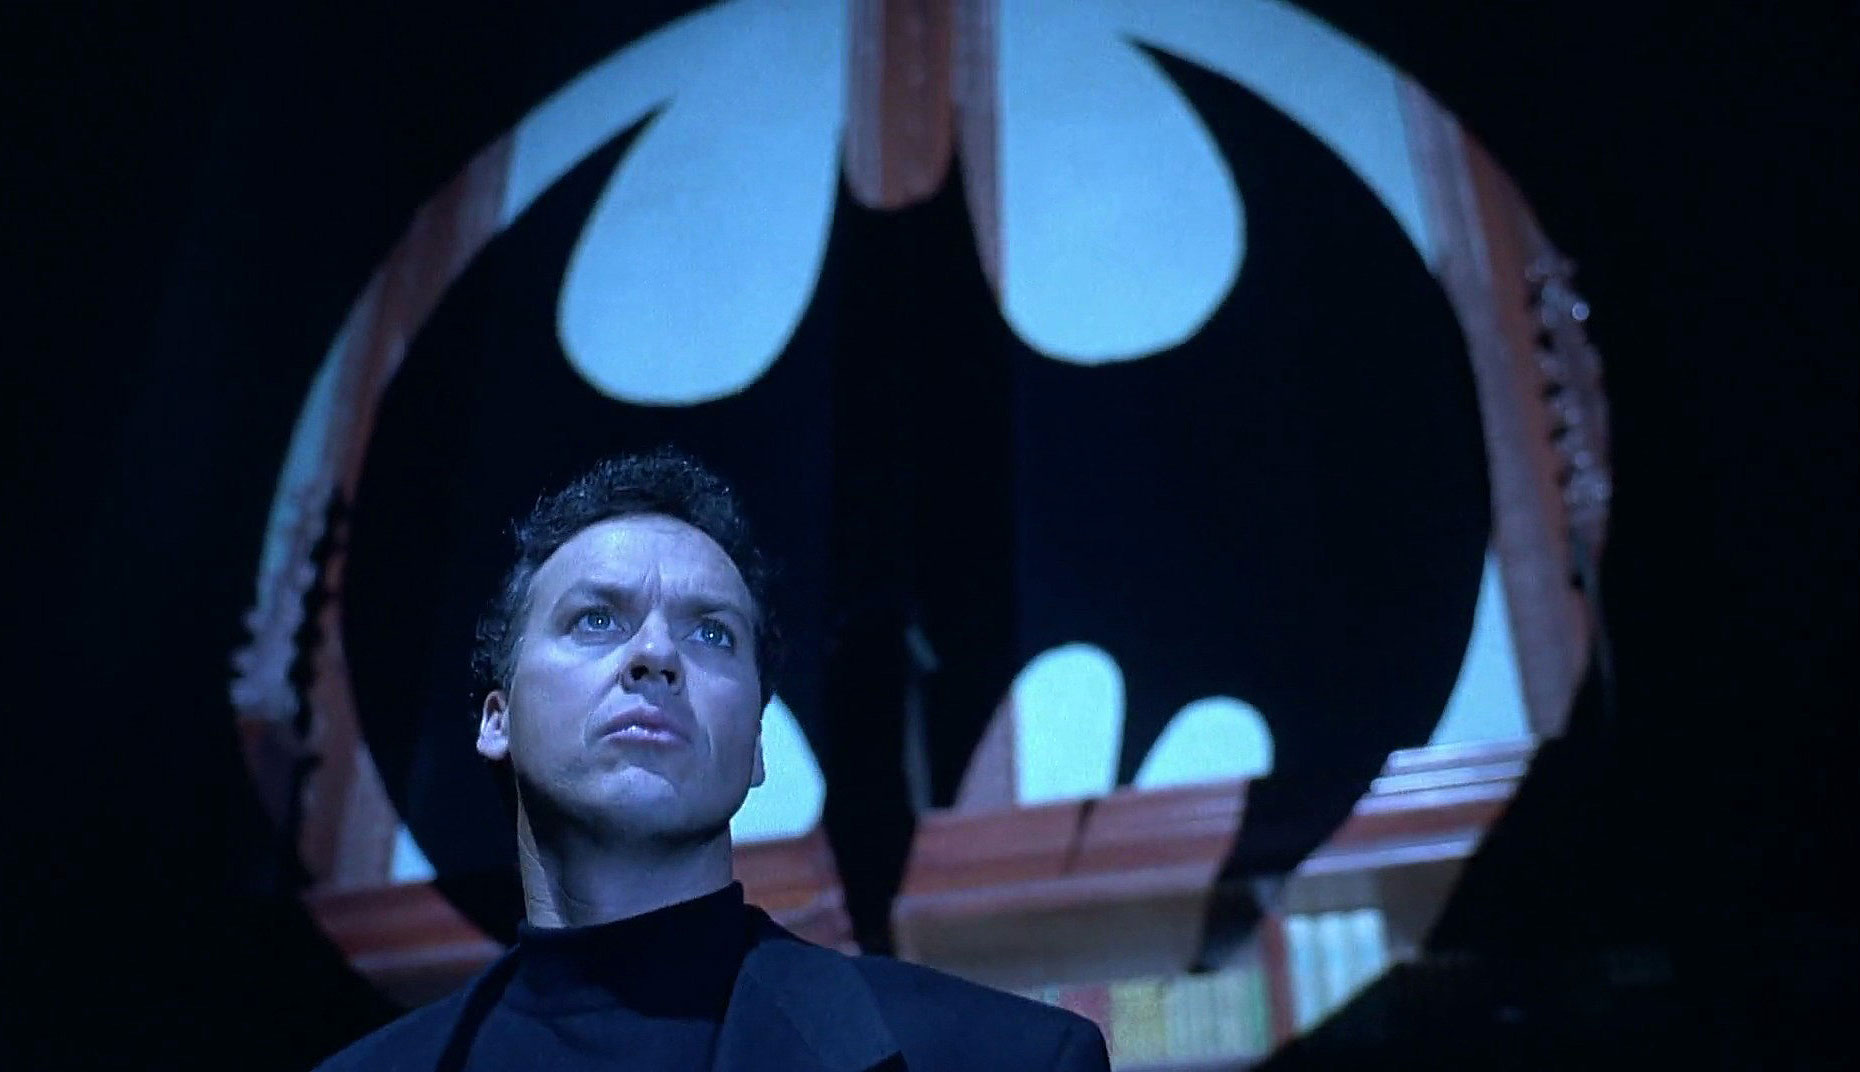 Michael Keaton in "Batman Returns"